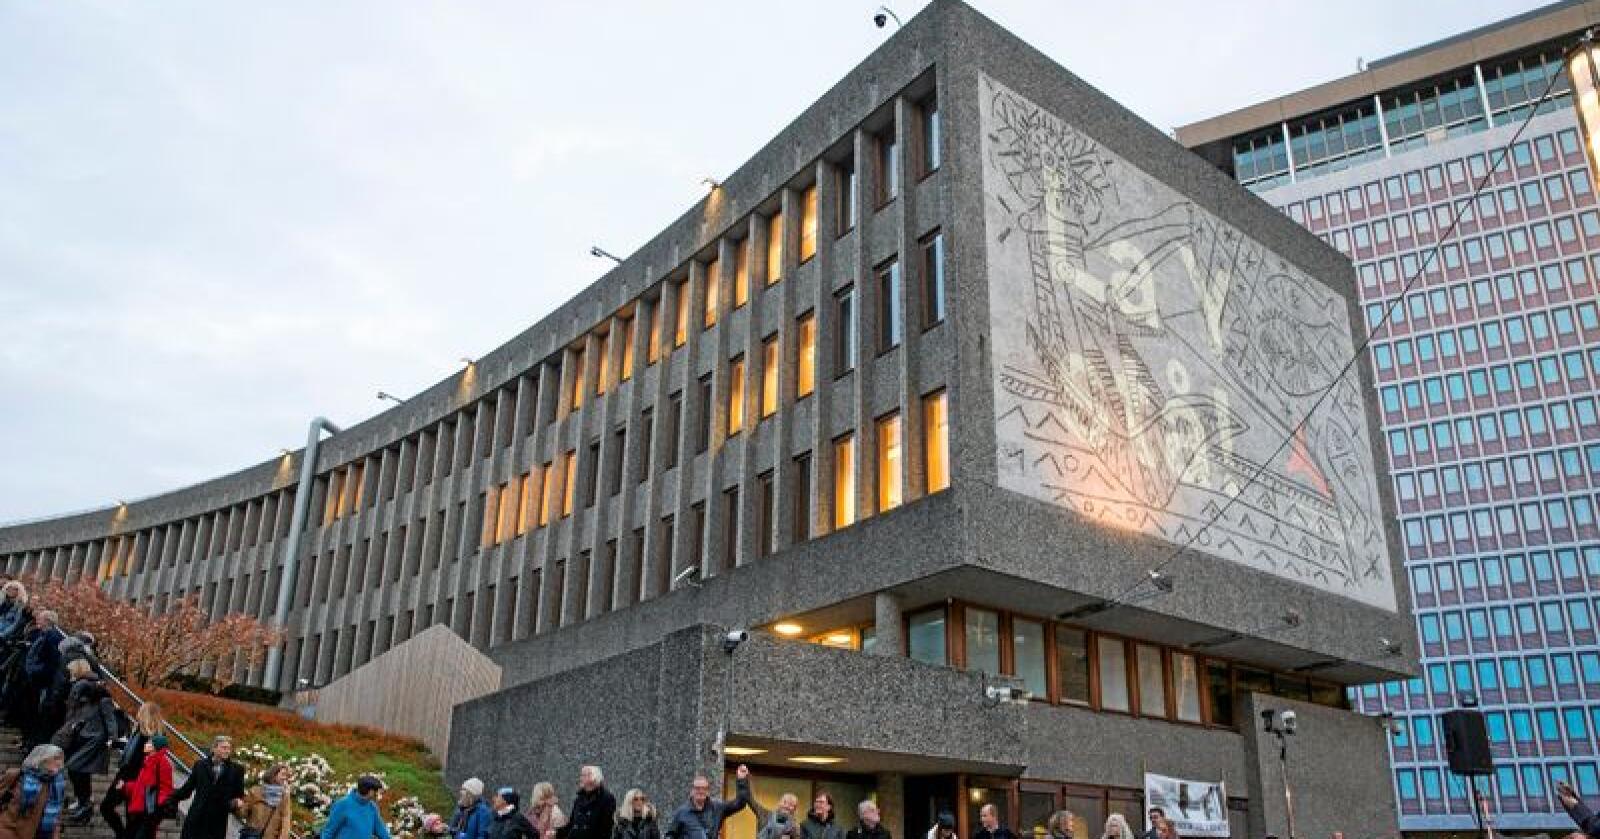 Picasso: Den kjente kunstneren Pablo Picasso har utsmykket Y-blokka i Oslo. Foto: Håkon Mosvold Larsen / NTB scanpix